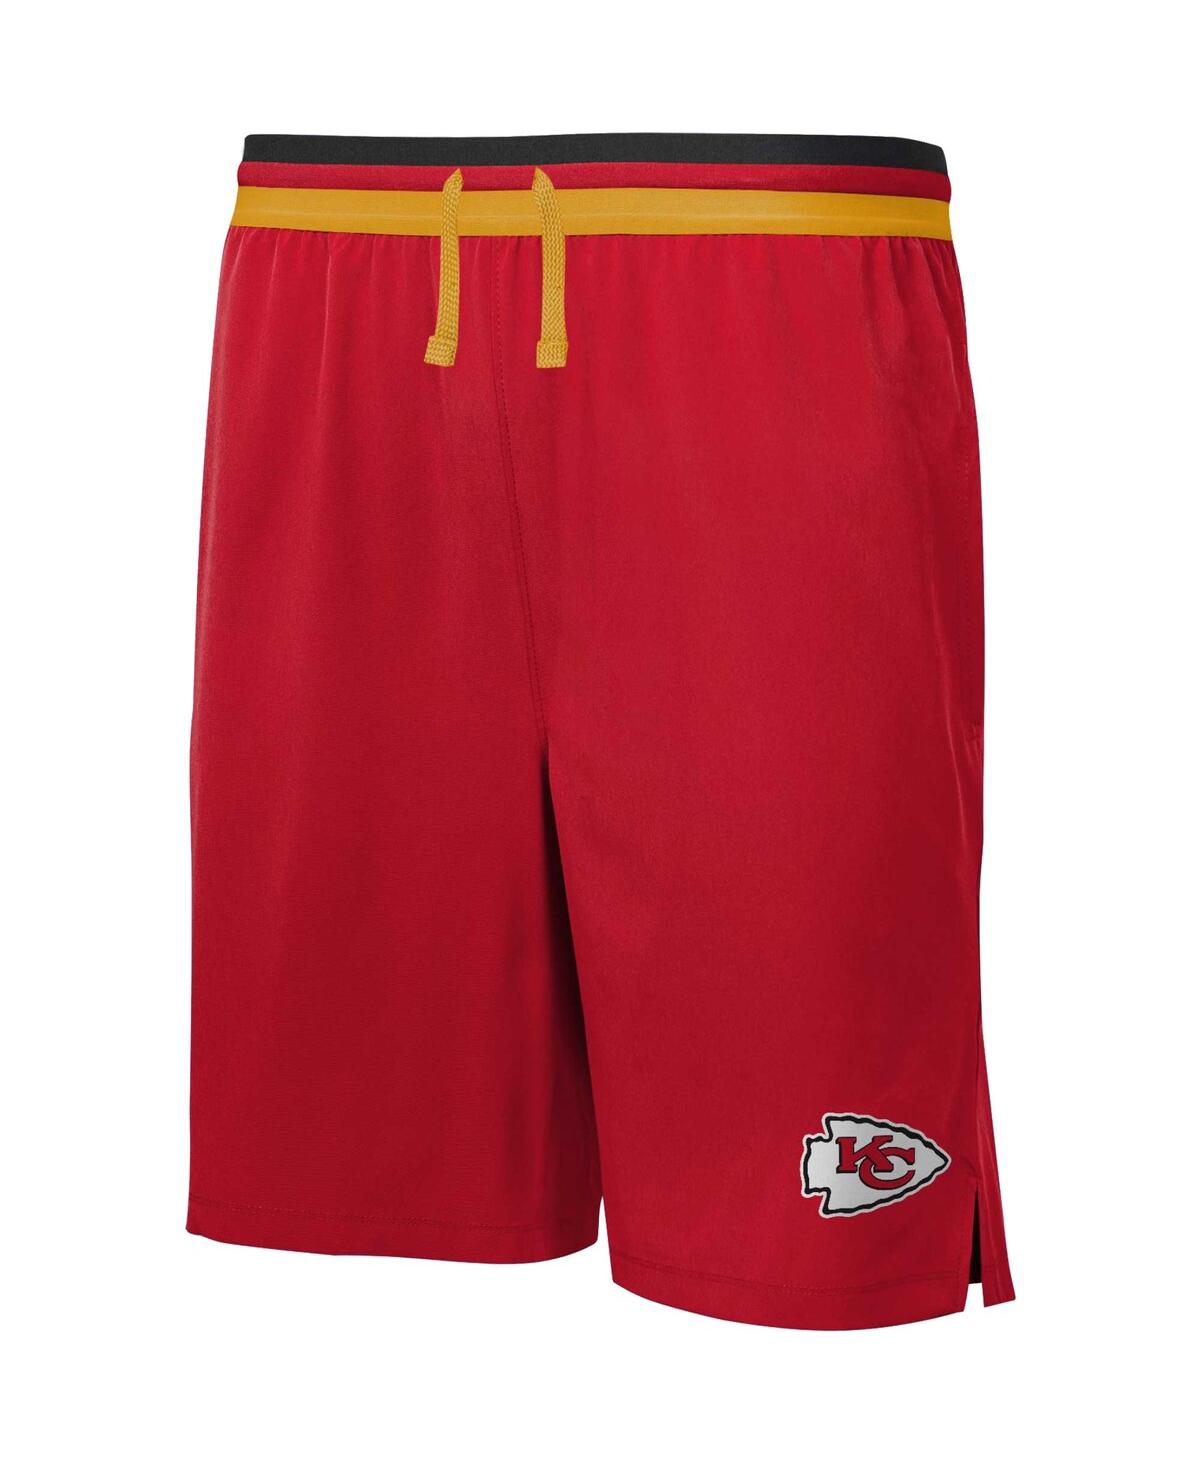 Shop Outerstuff Men's Red Kansas City Chiefs Cool Down Tri-color Elastic Training Shorts